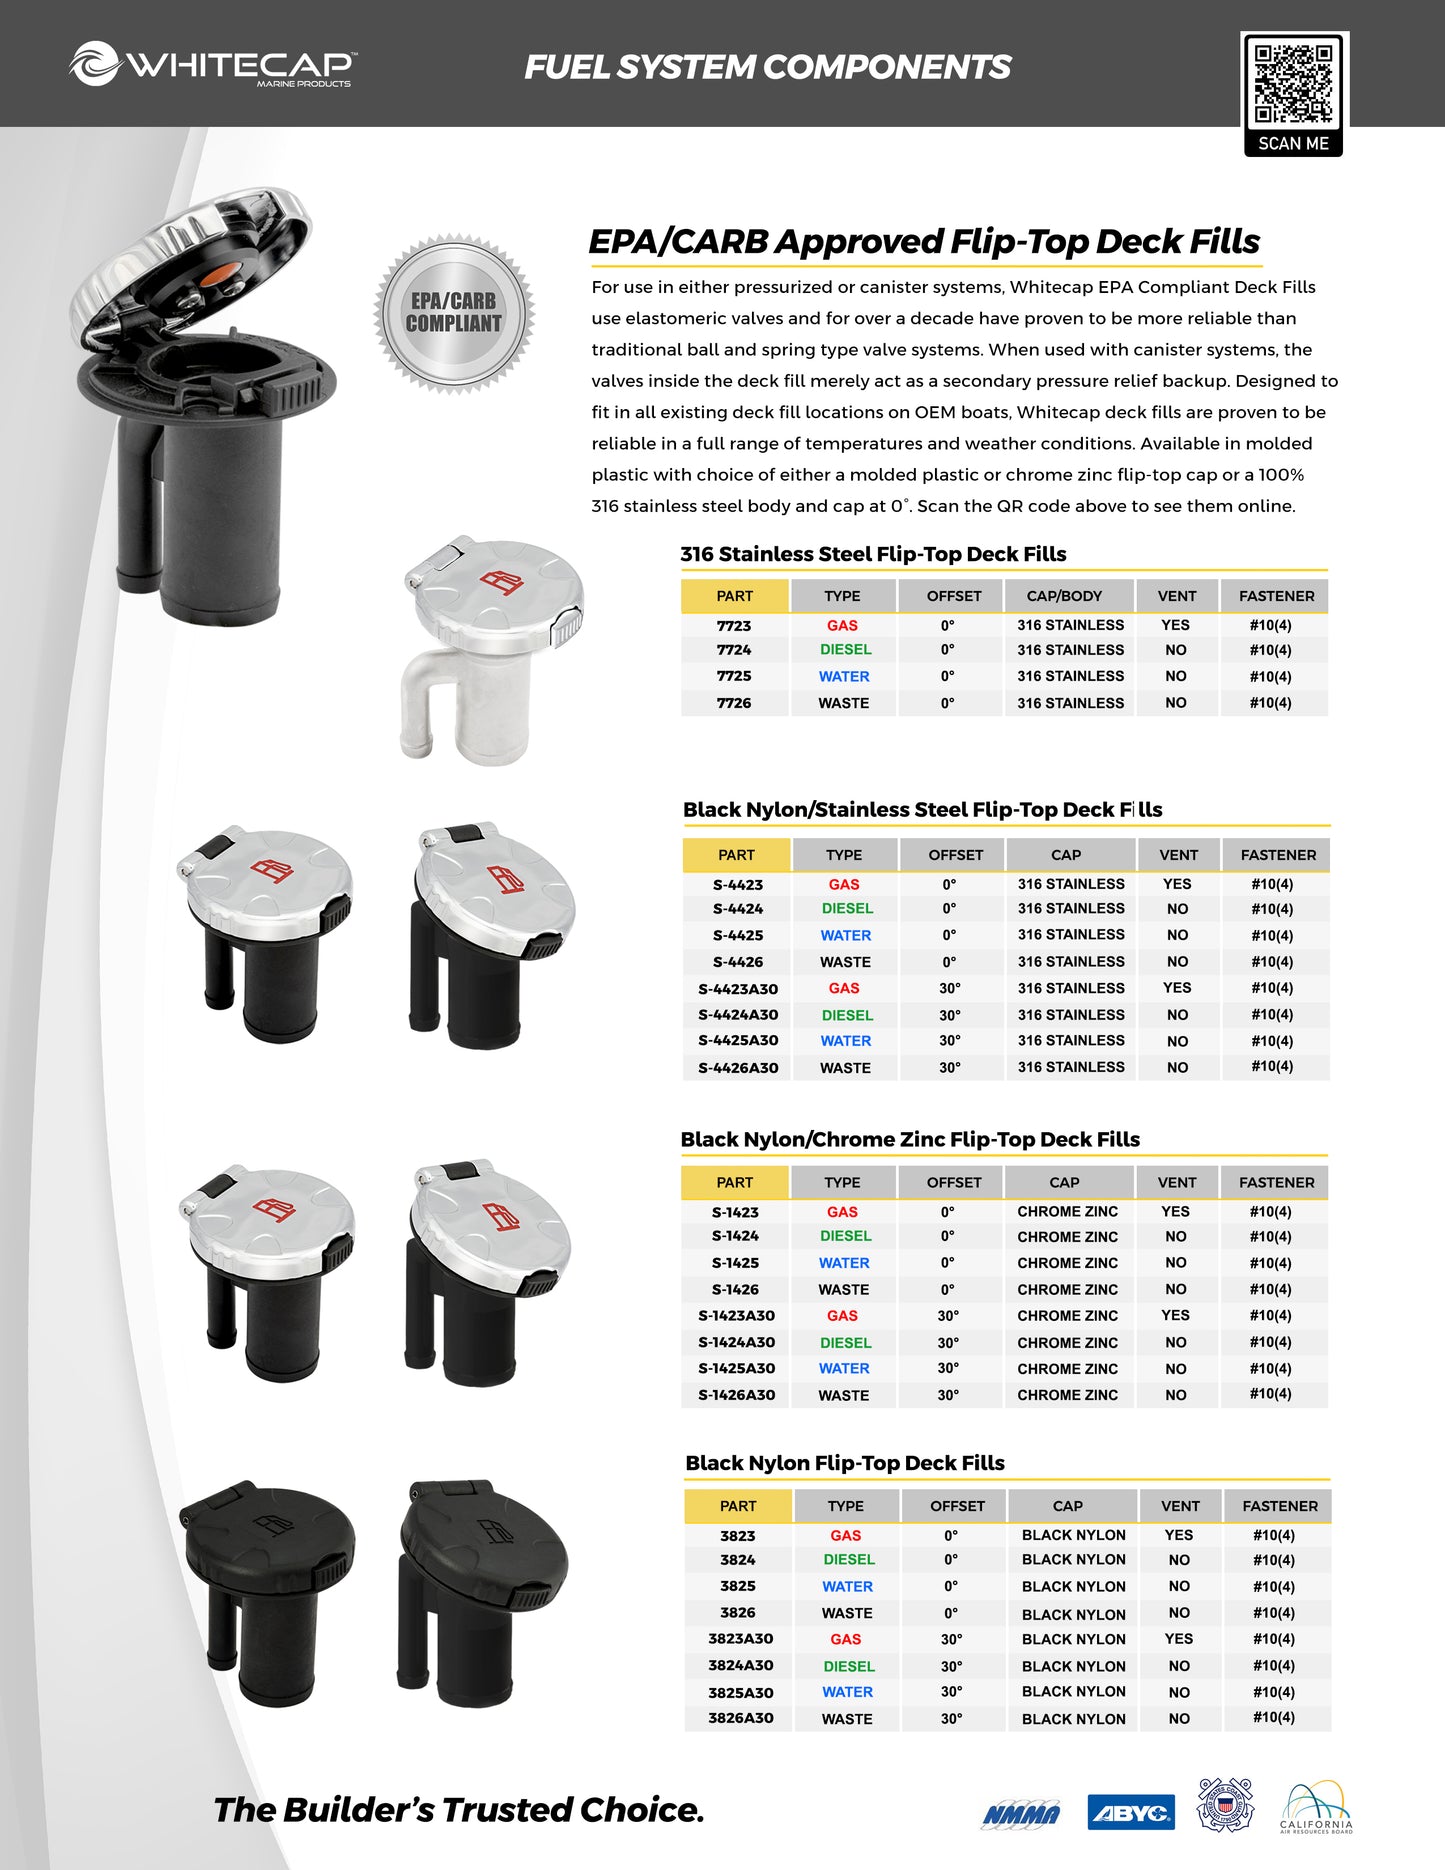 EPA/CARB Flip Top Pressurized Deck Fill - Gas